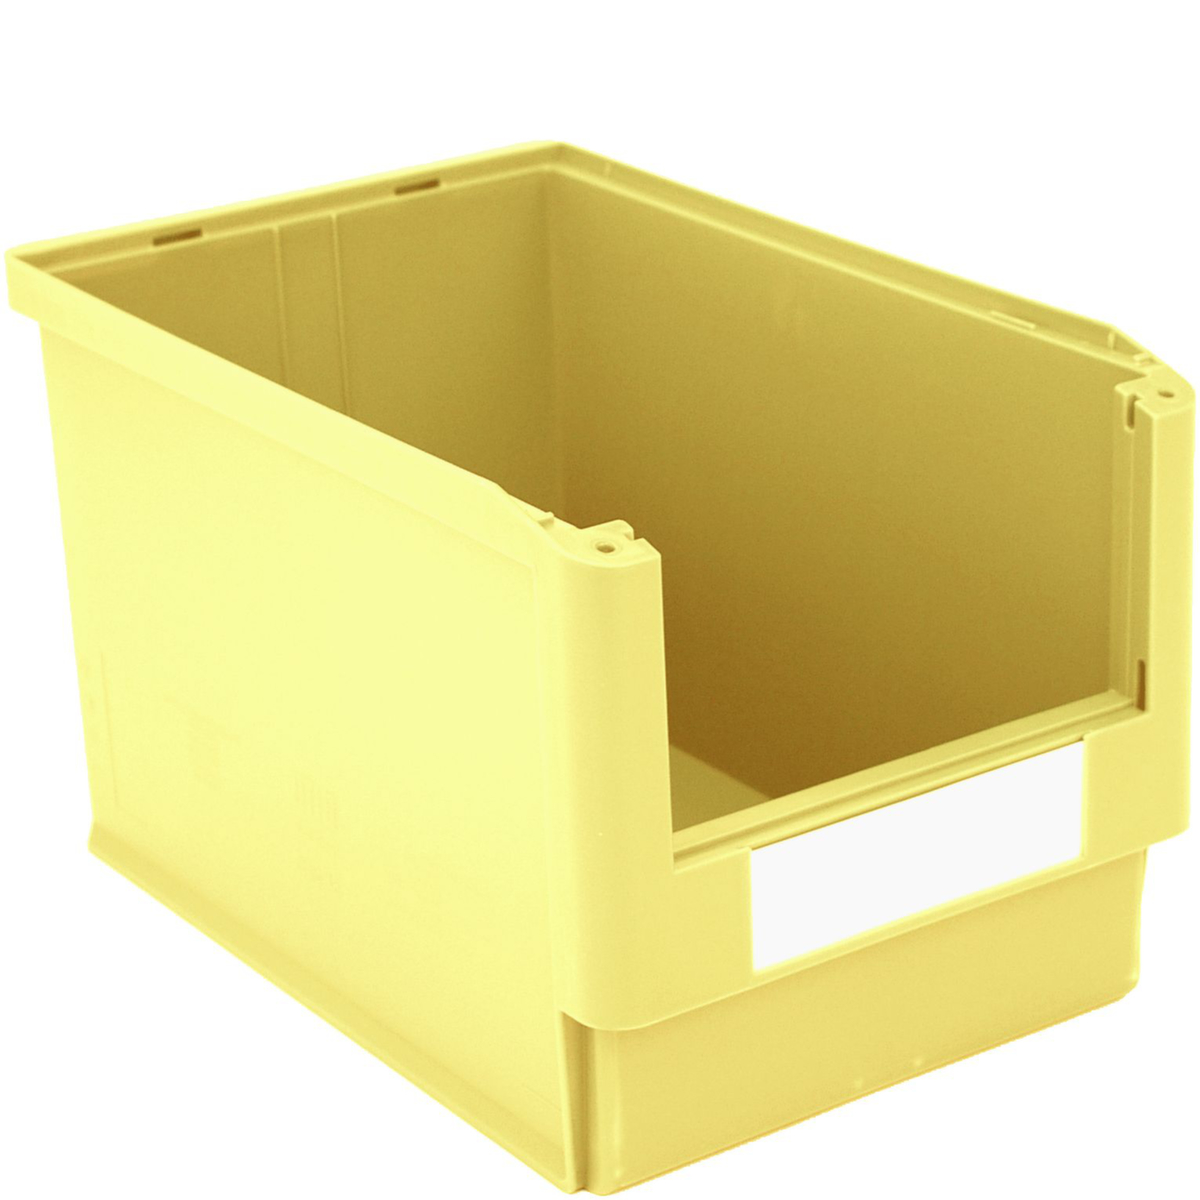 Sichtlagerkasten Top hoch belastbar, gelb, Tiefe 500 mm, Polypropylen Standard 2 ZOOM